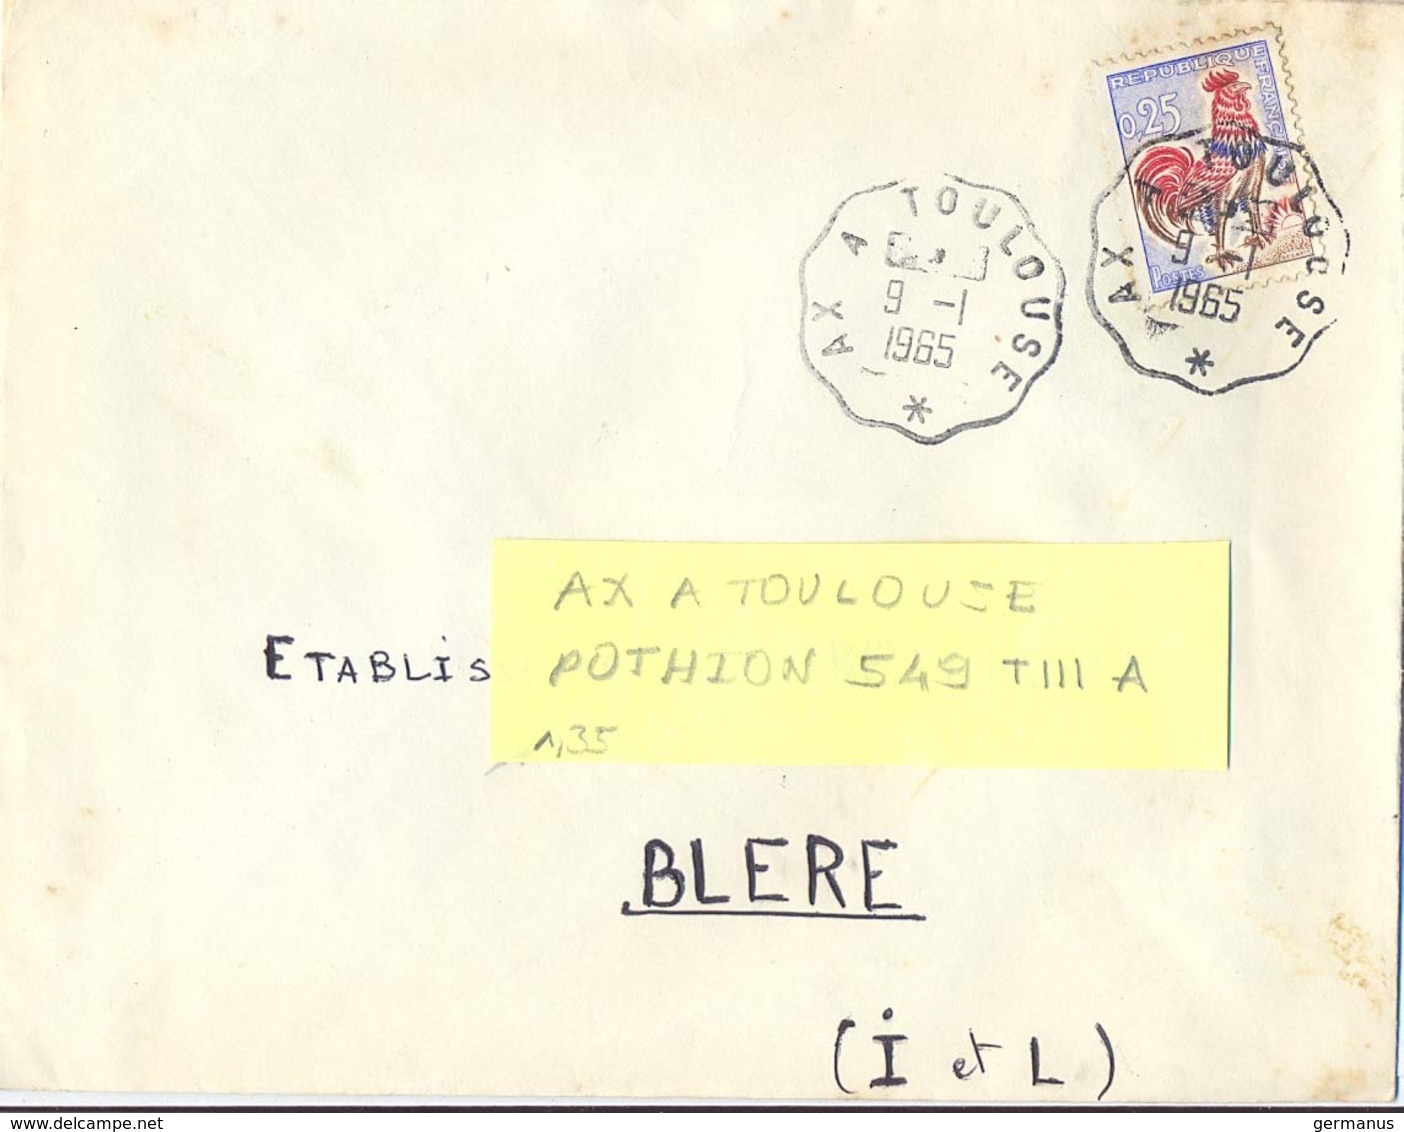 TàD CONVOYEUR AX A TOULOUSE 9-1-1965 – POTHION 549 TIII ALLER - Railway Post